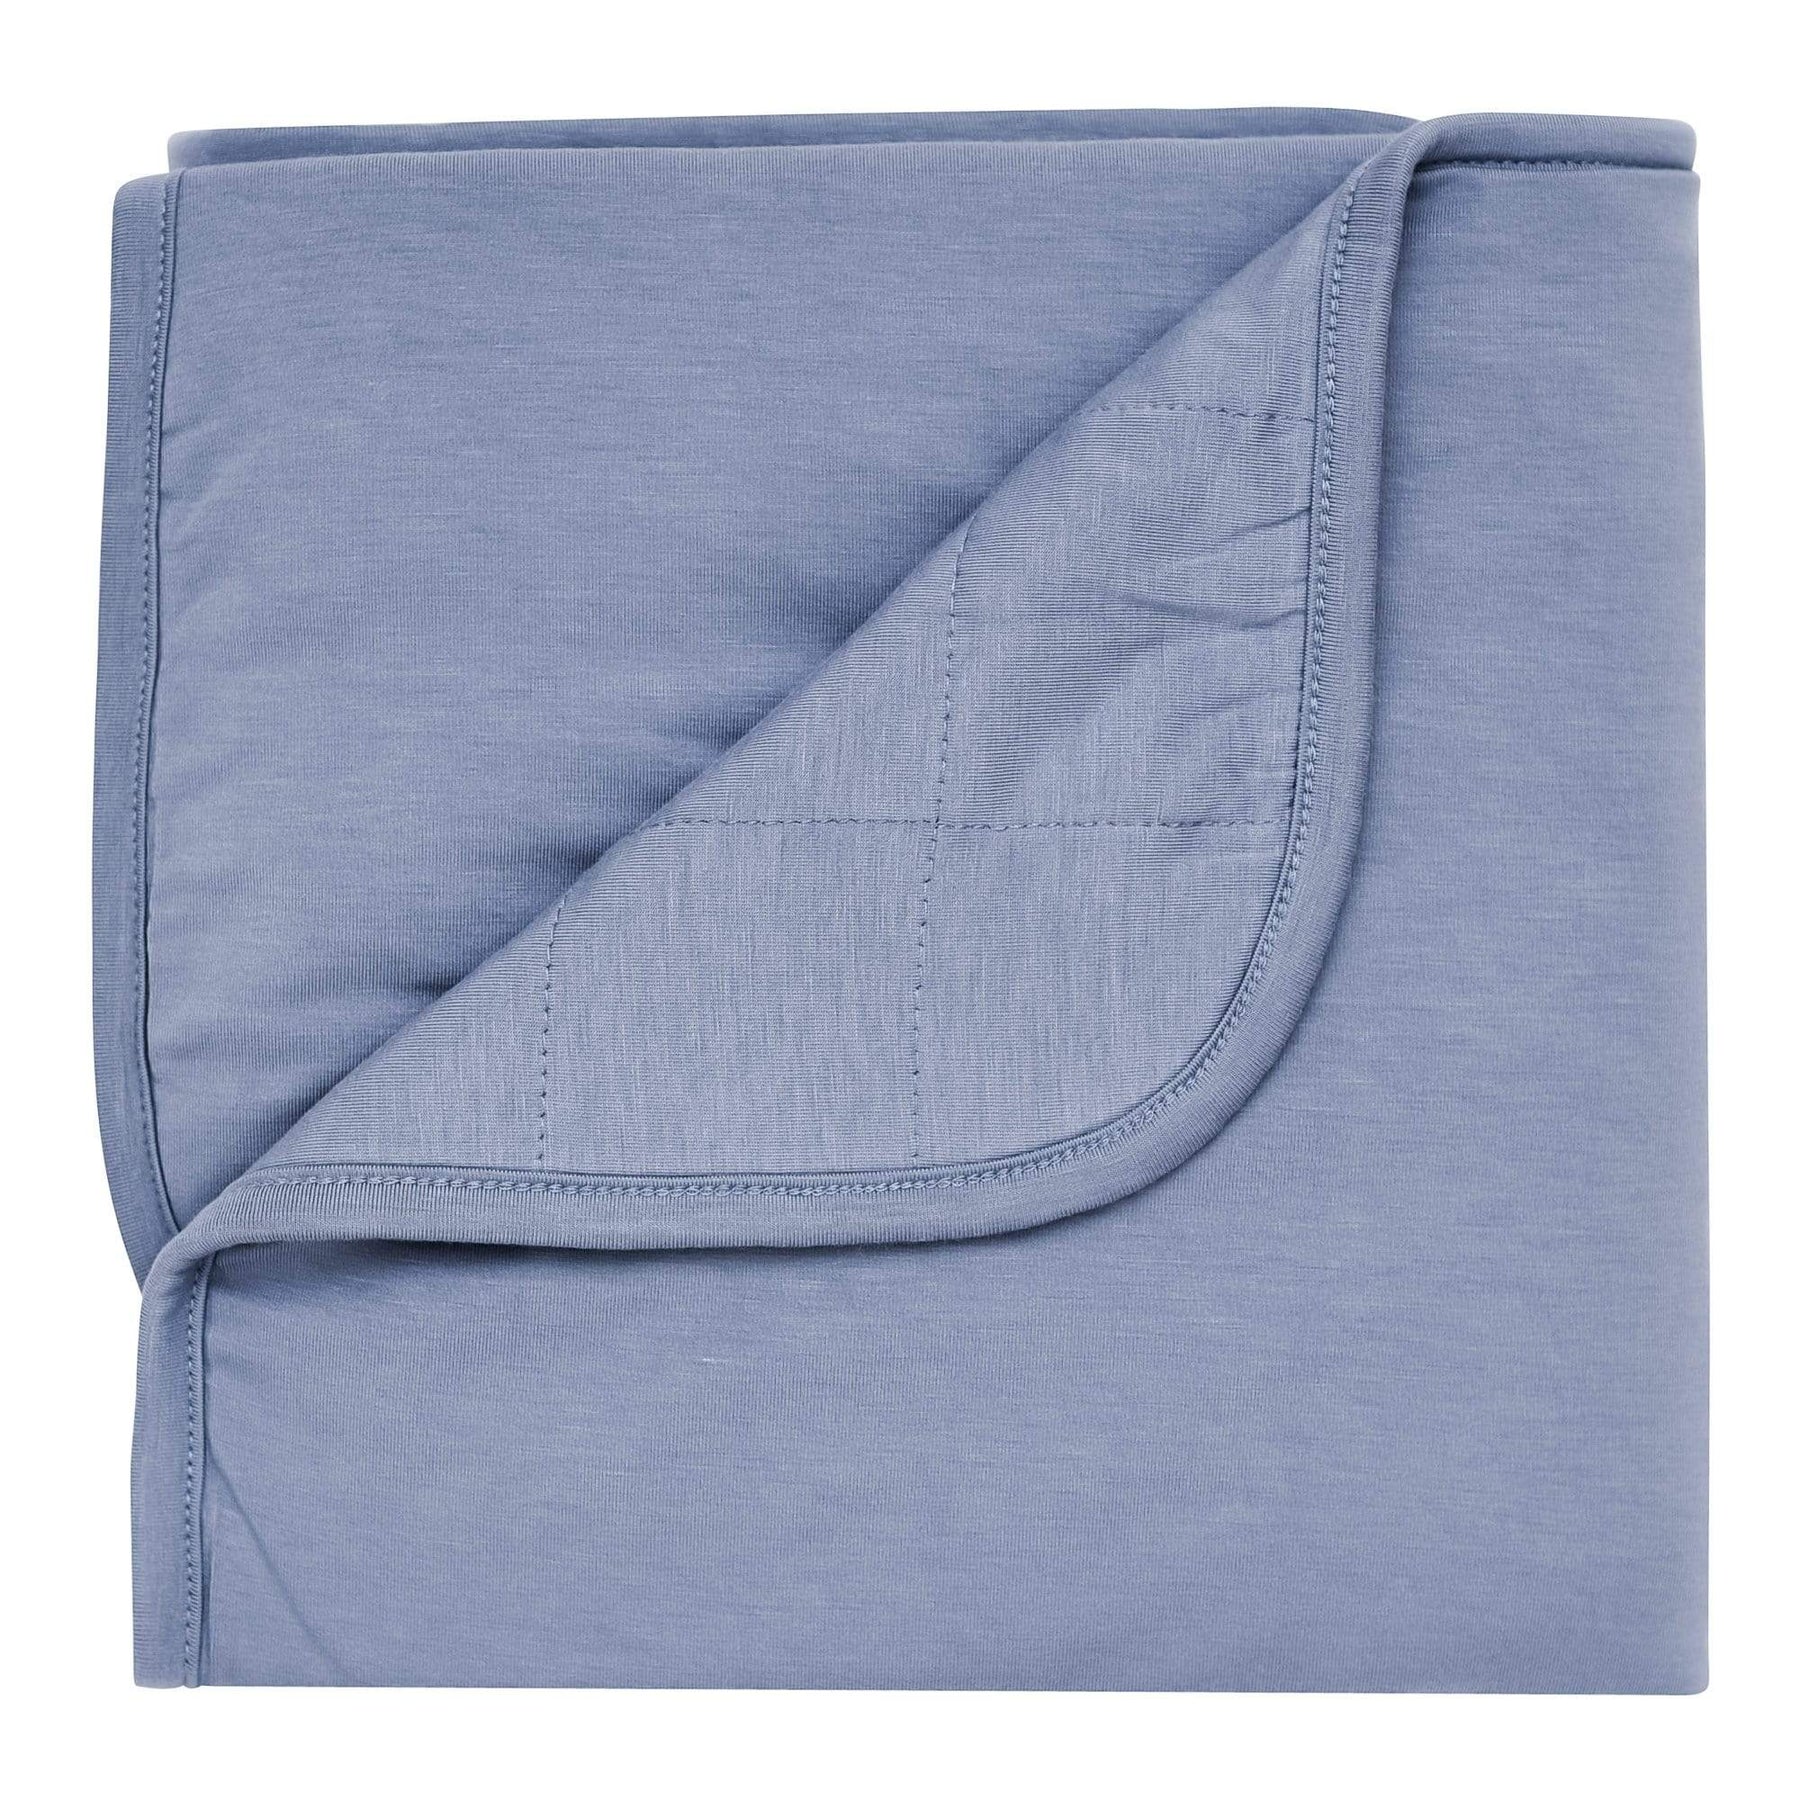 Kyte BABY Baby Blanket Slate / Infant / 1.0 Tog Baby Blanket in Slate